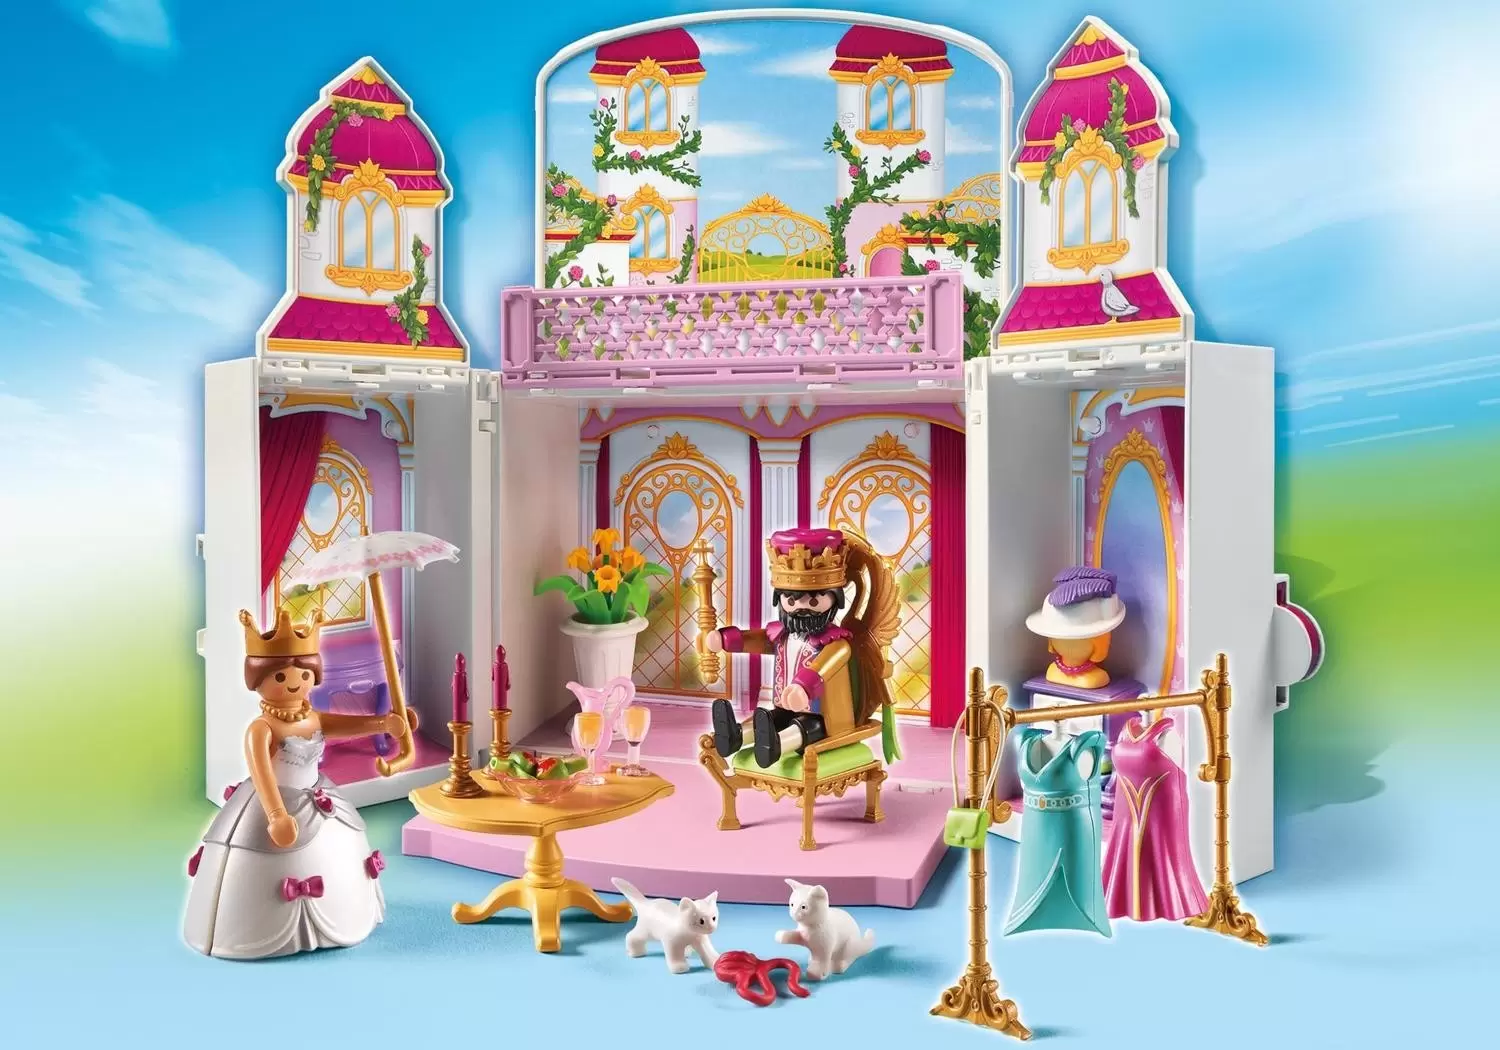 Chateau princesse playmobil